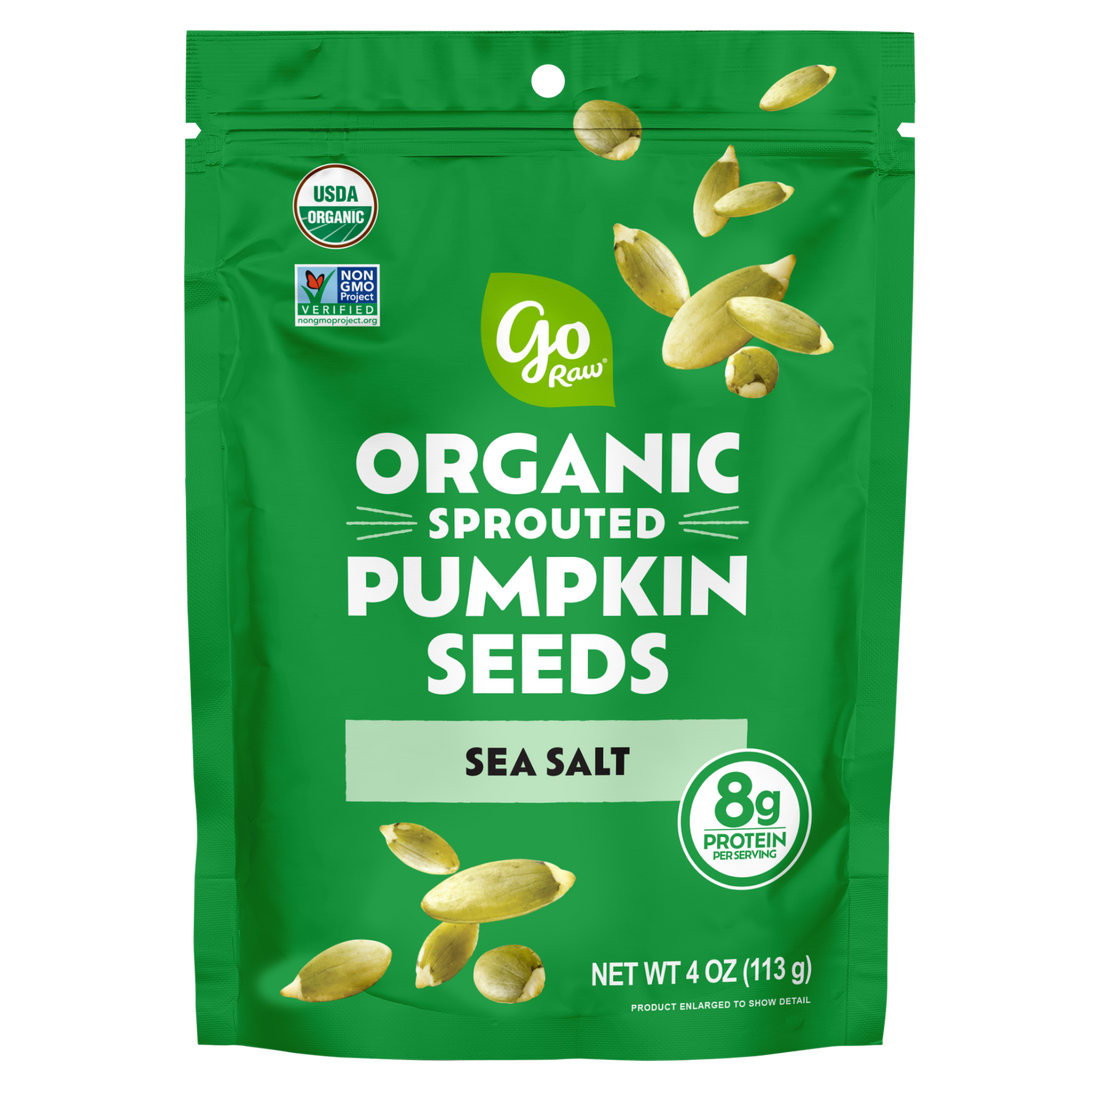 Pumpkin Snacking Seeds - 10 Bags, 4oz Each